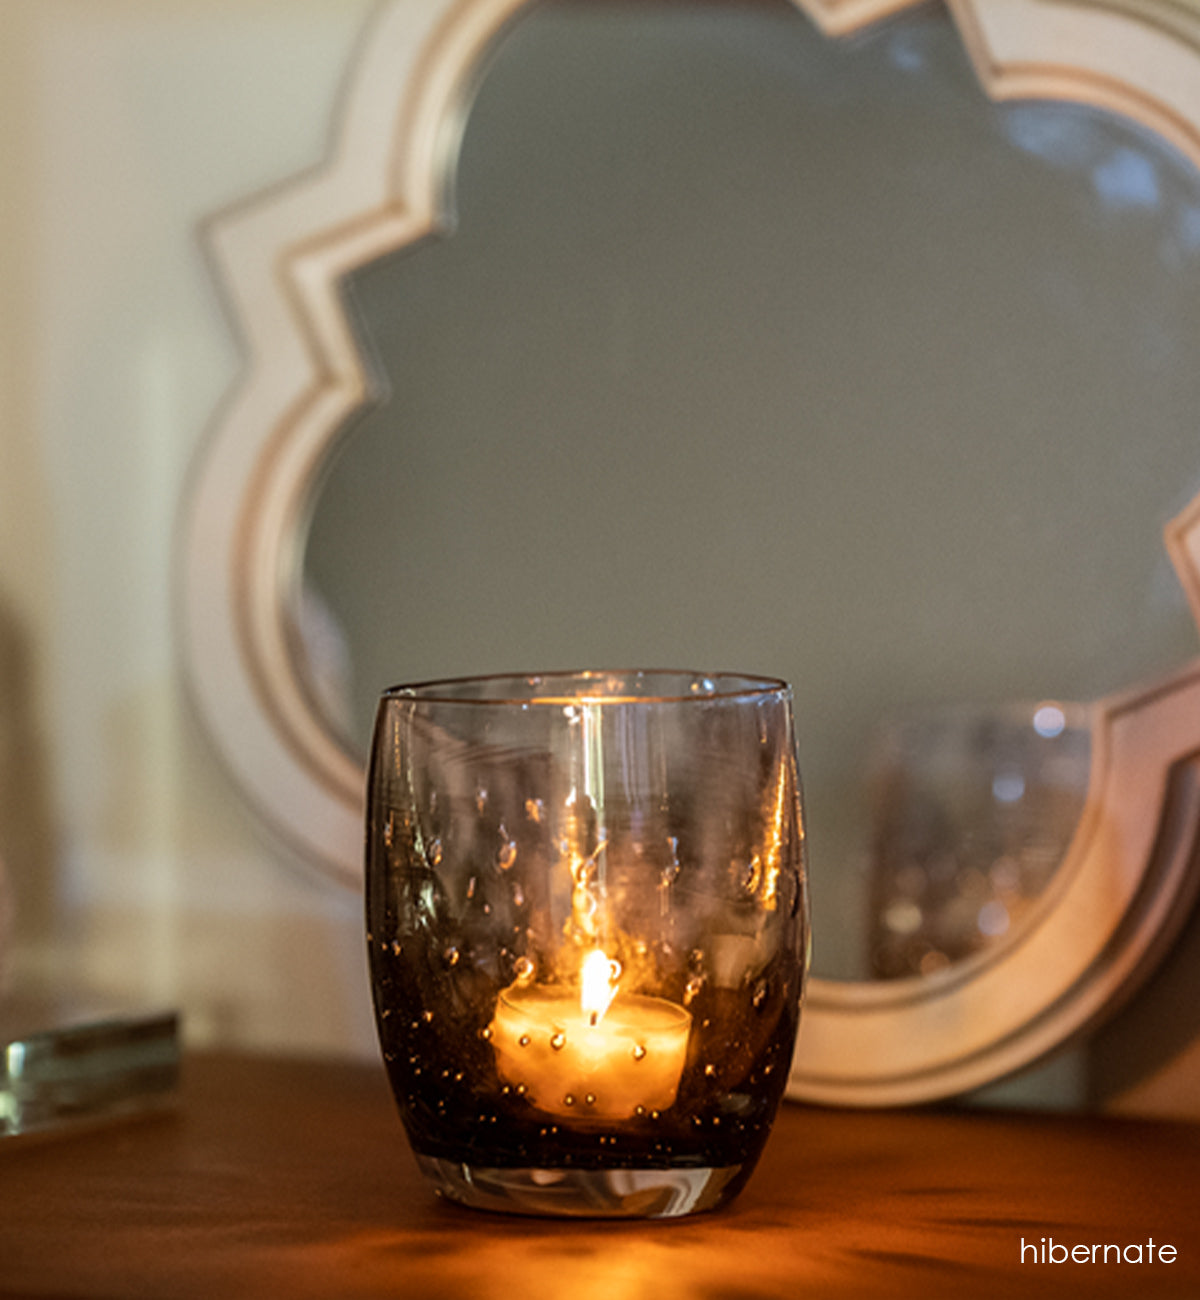 smokey grey hand-blown glass candle holder with a beautiful bubble pattern.